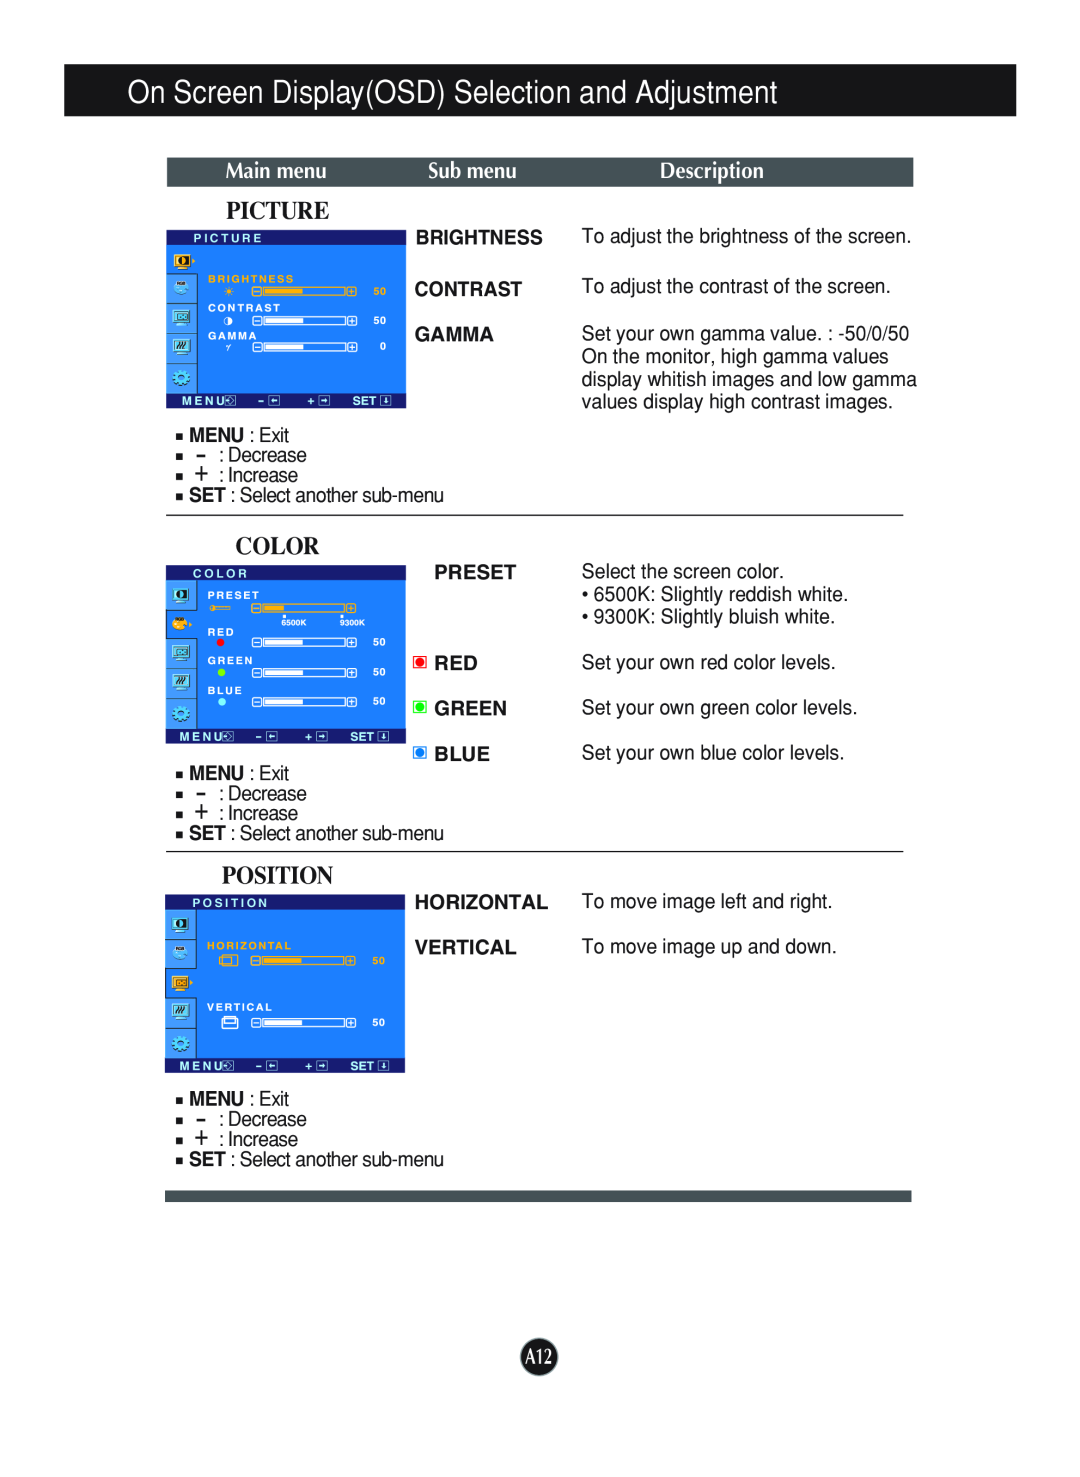 LG Electronics L1740P Picture, Color, Position, Main menu, Description, On Screen DisplayOSD Selection and Adjustment 